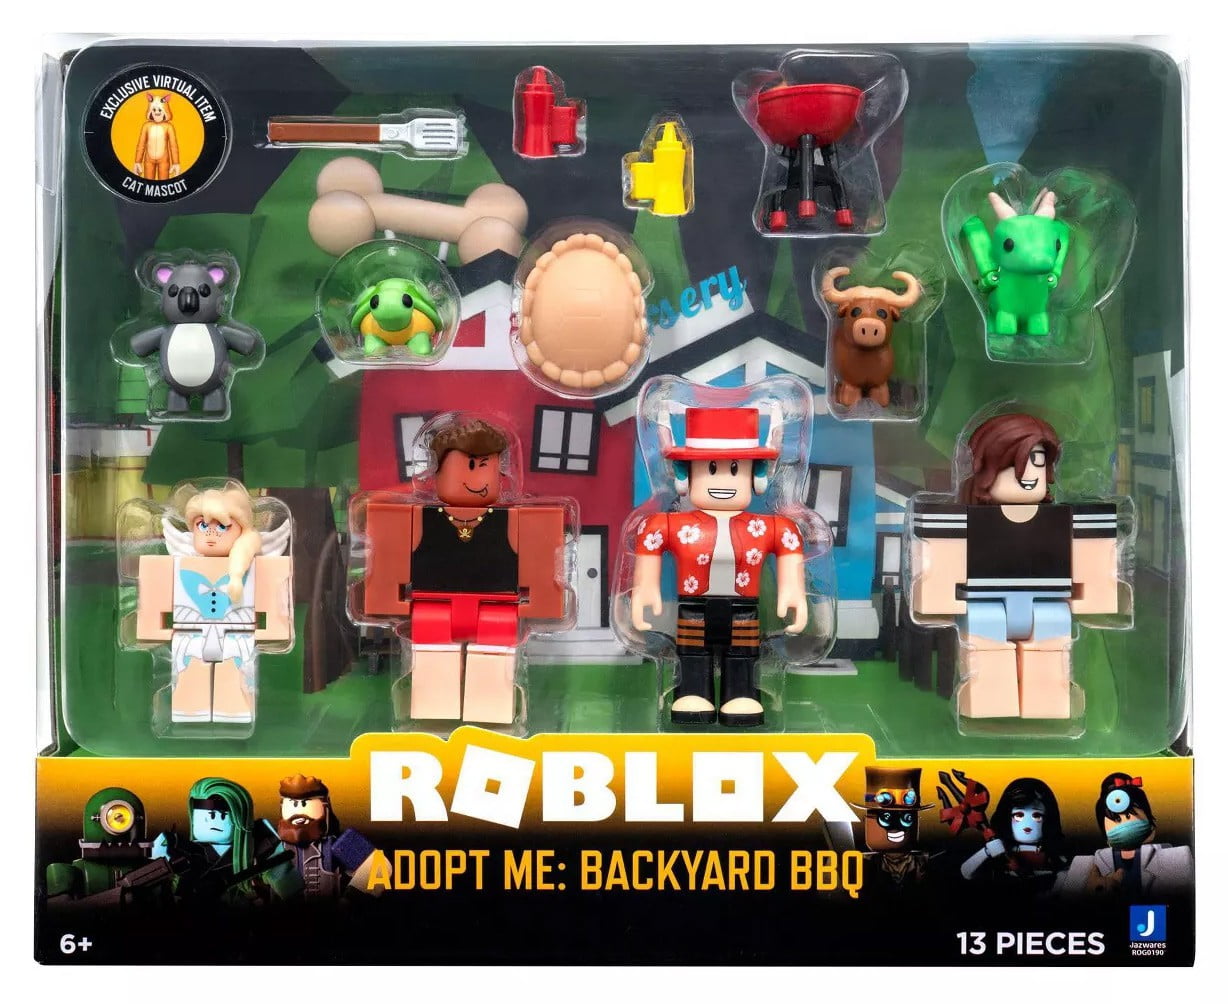 Roblox Adopt Me Backyard Bbq Action Figure 4 Pack Walmart Com Walmart Com - roblox toys adopt me